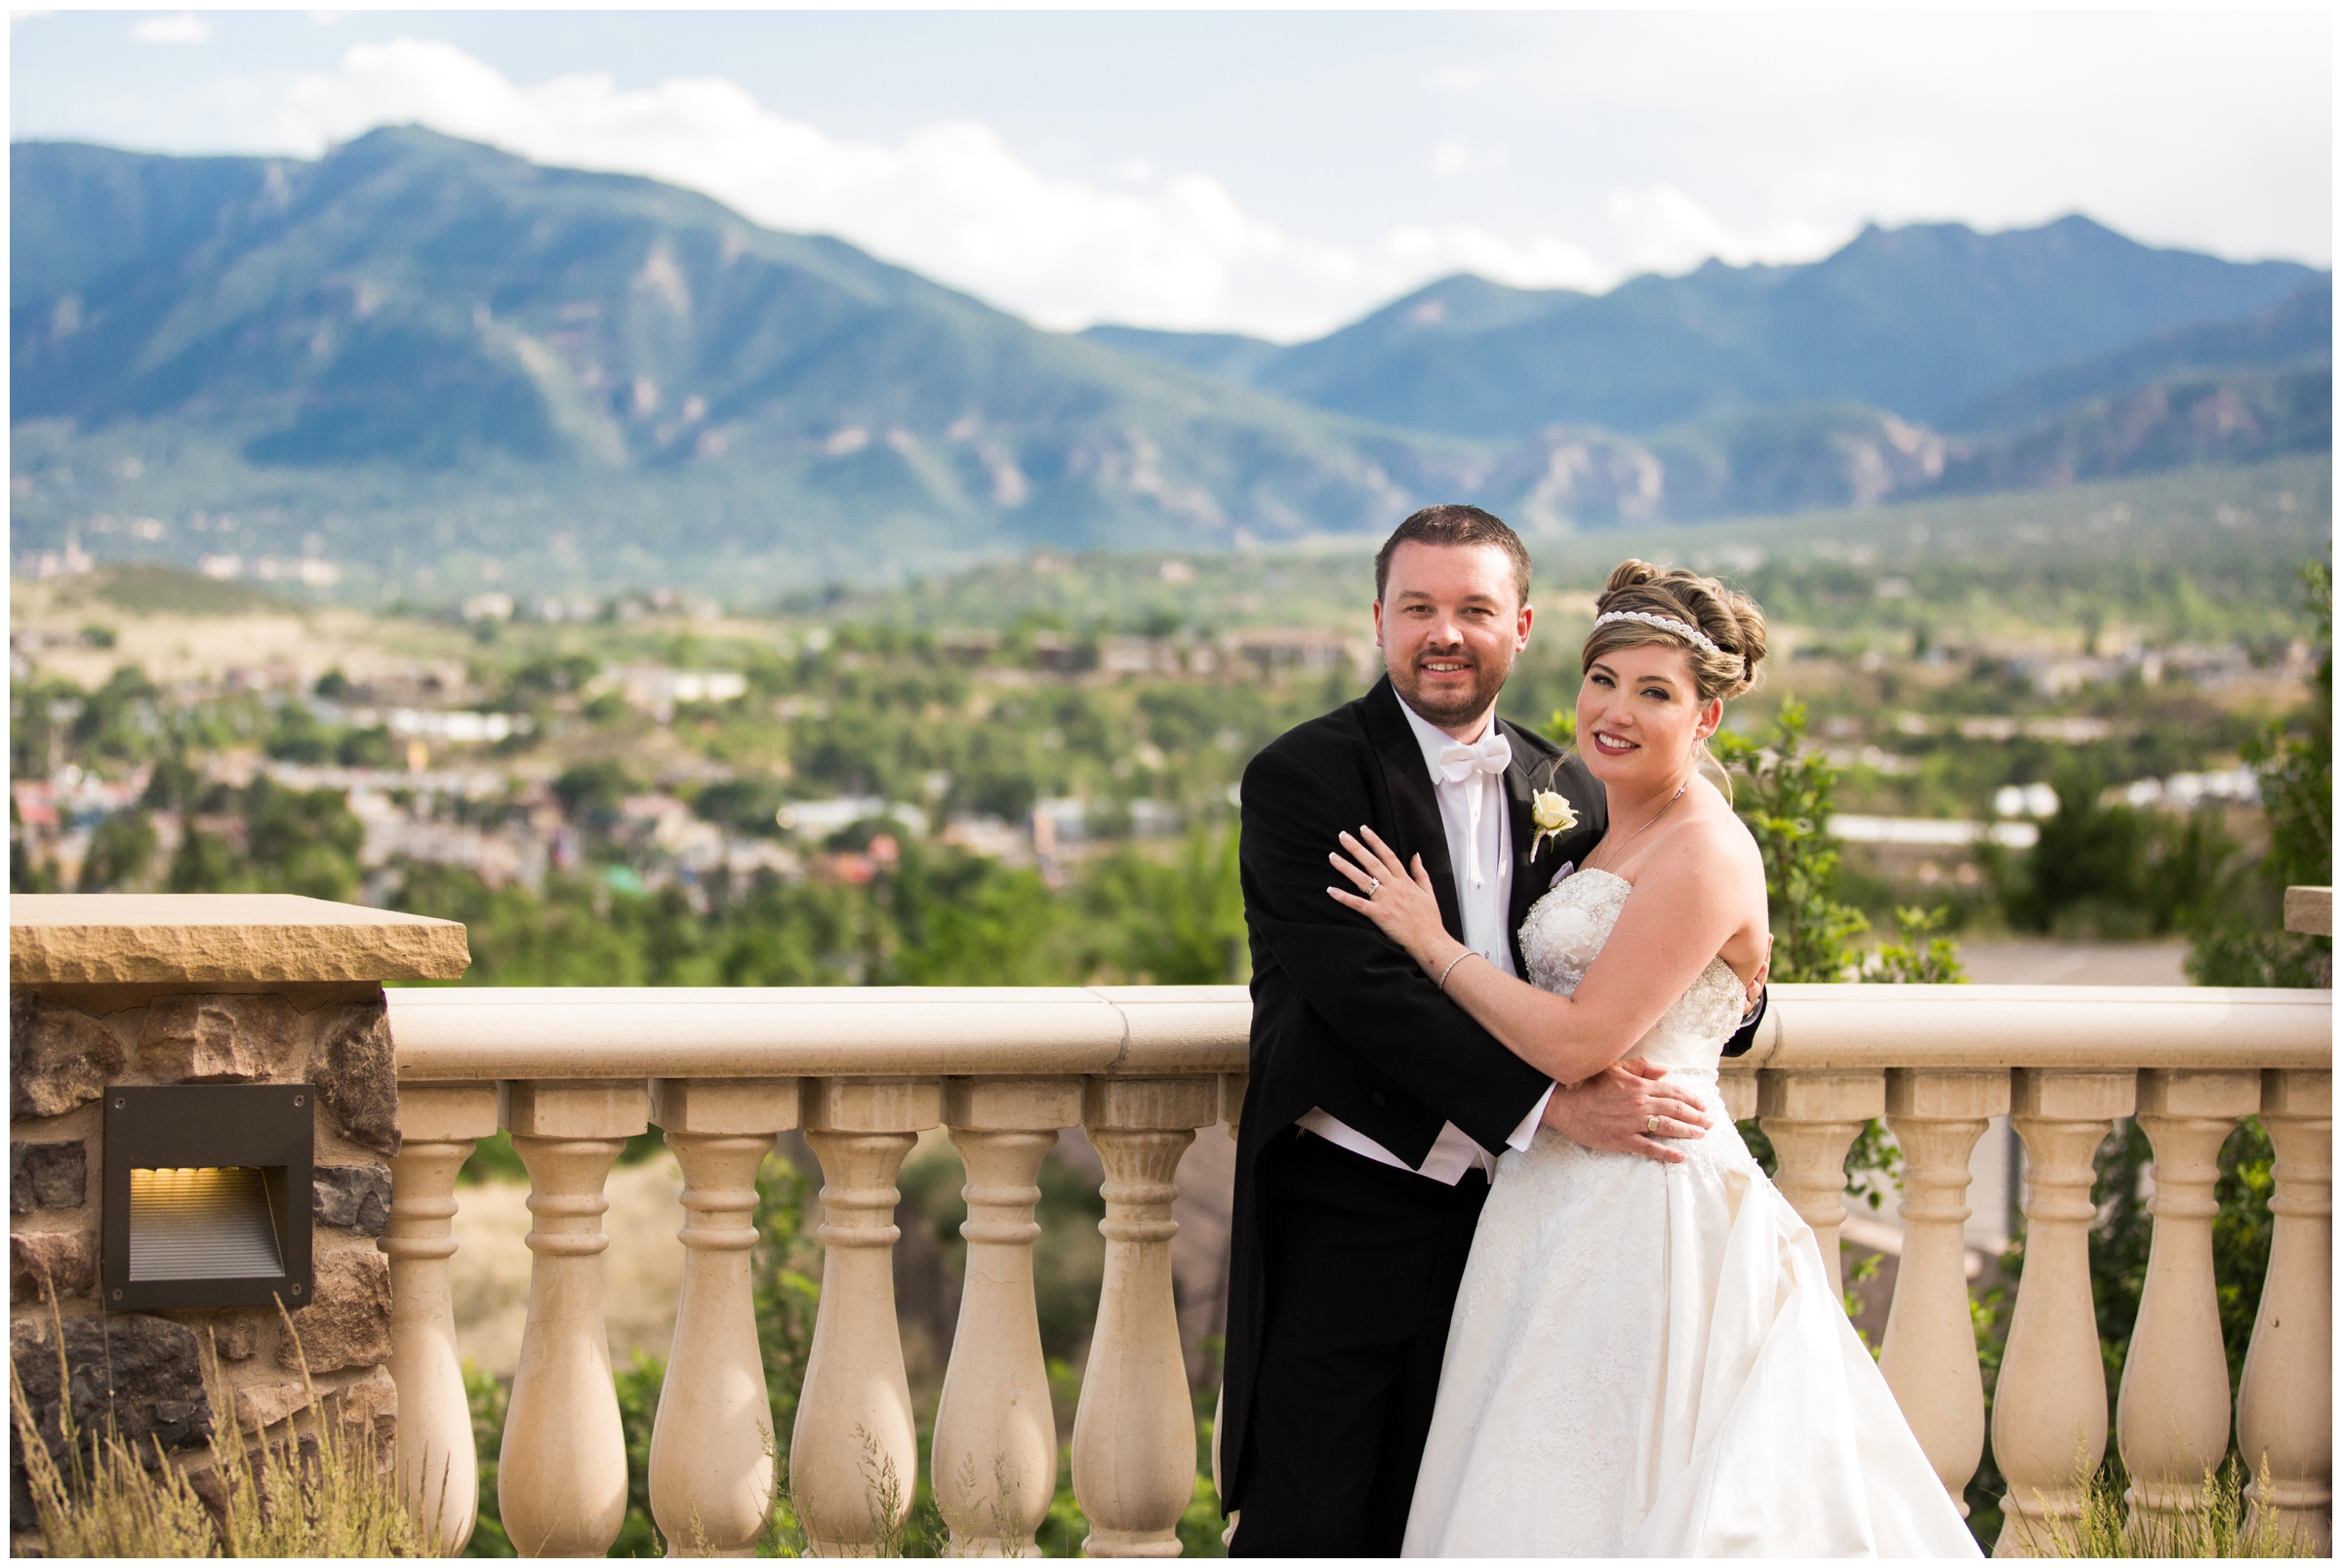 The Pinery Colorado Springs wedding photos by Colorado photographer Plum Pretty Photography